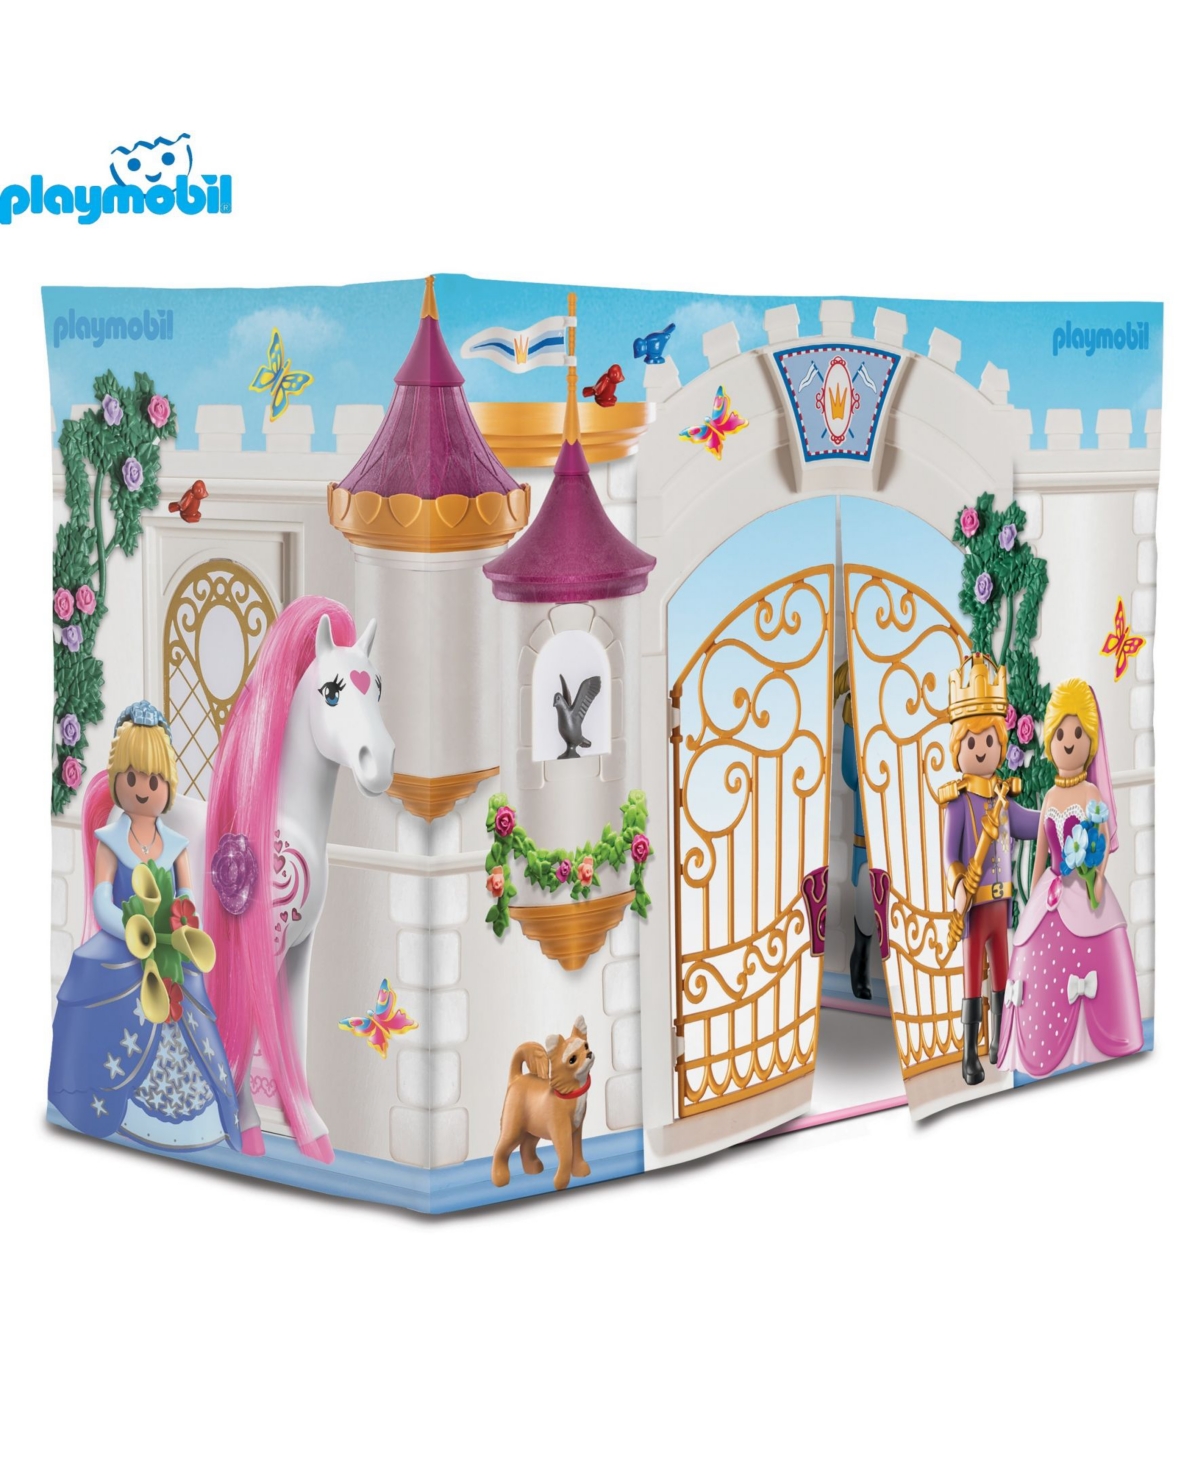 Redbox Playmobil Large Princess Castle Pretend Play Tent Playhouse In Multi